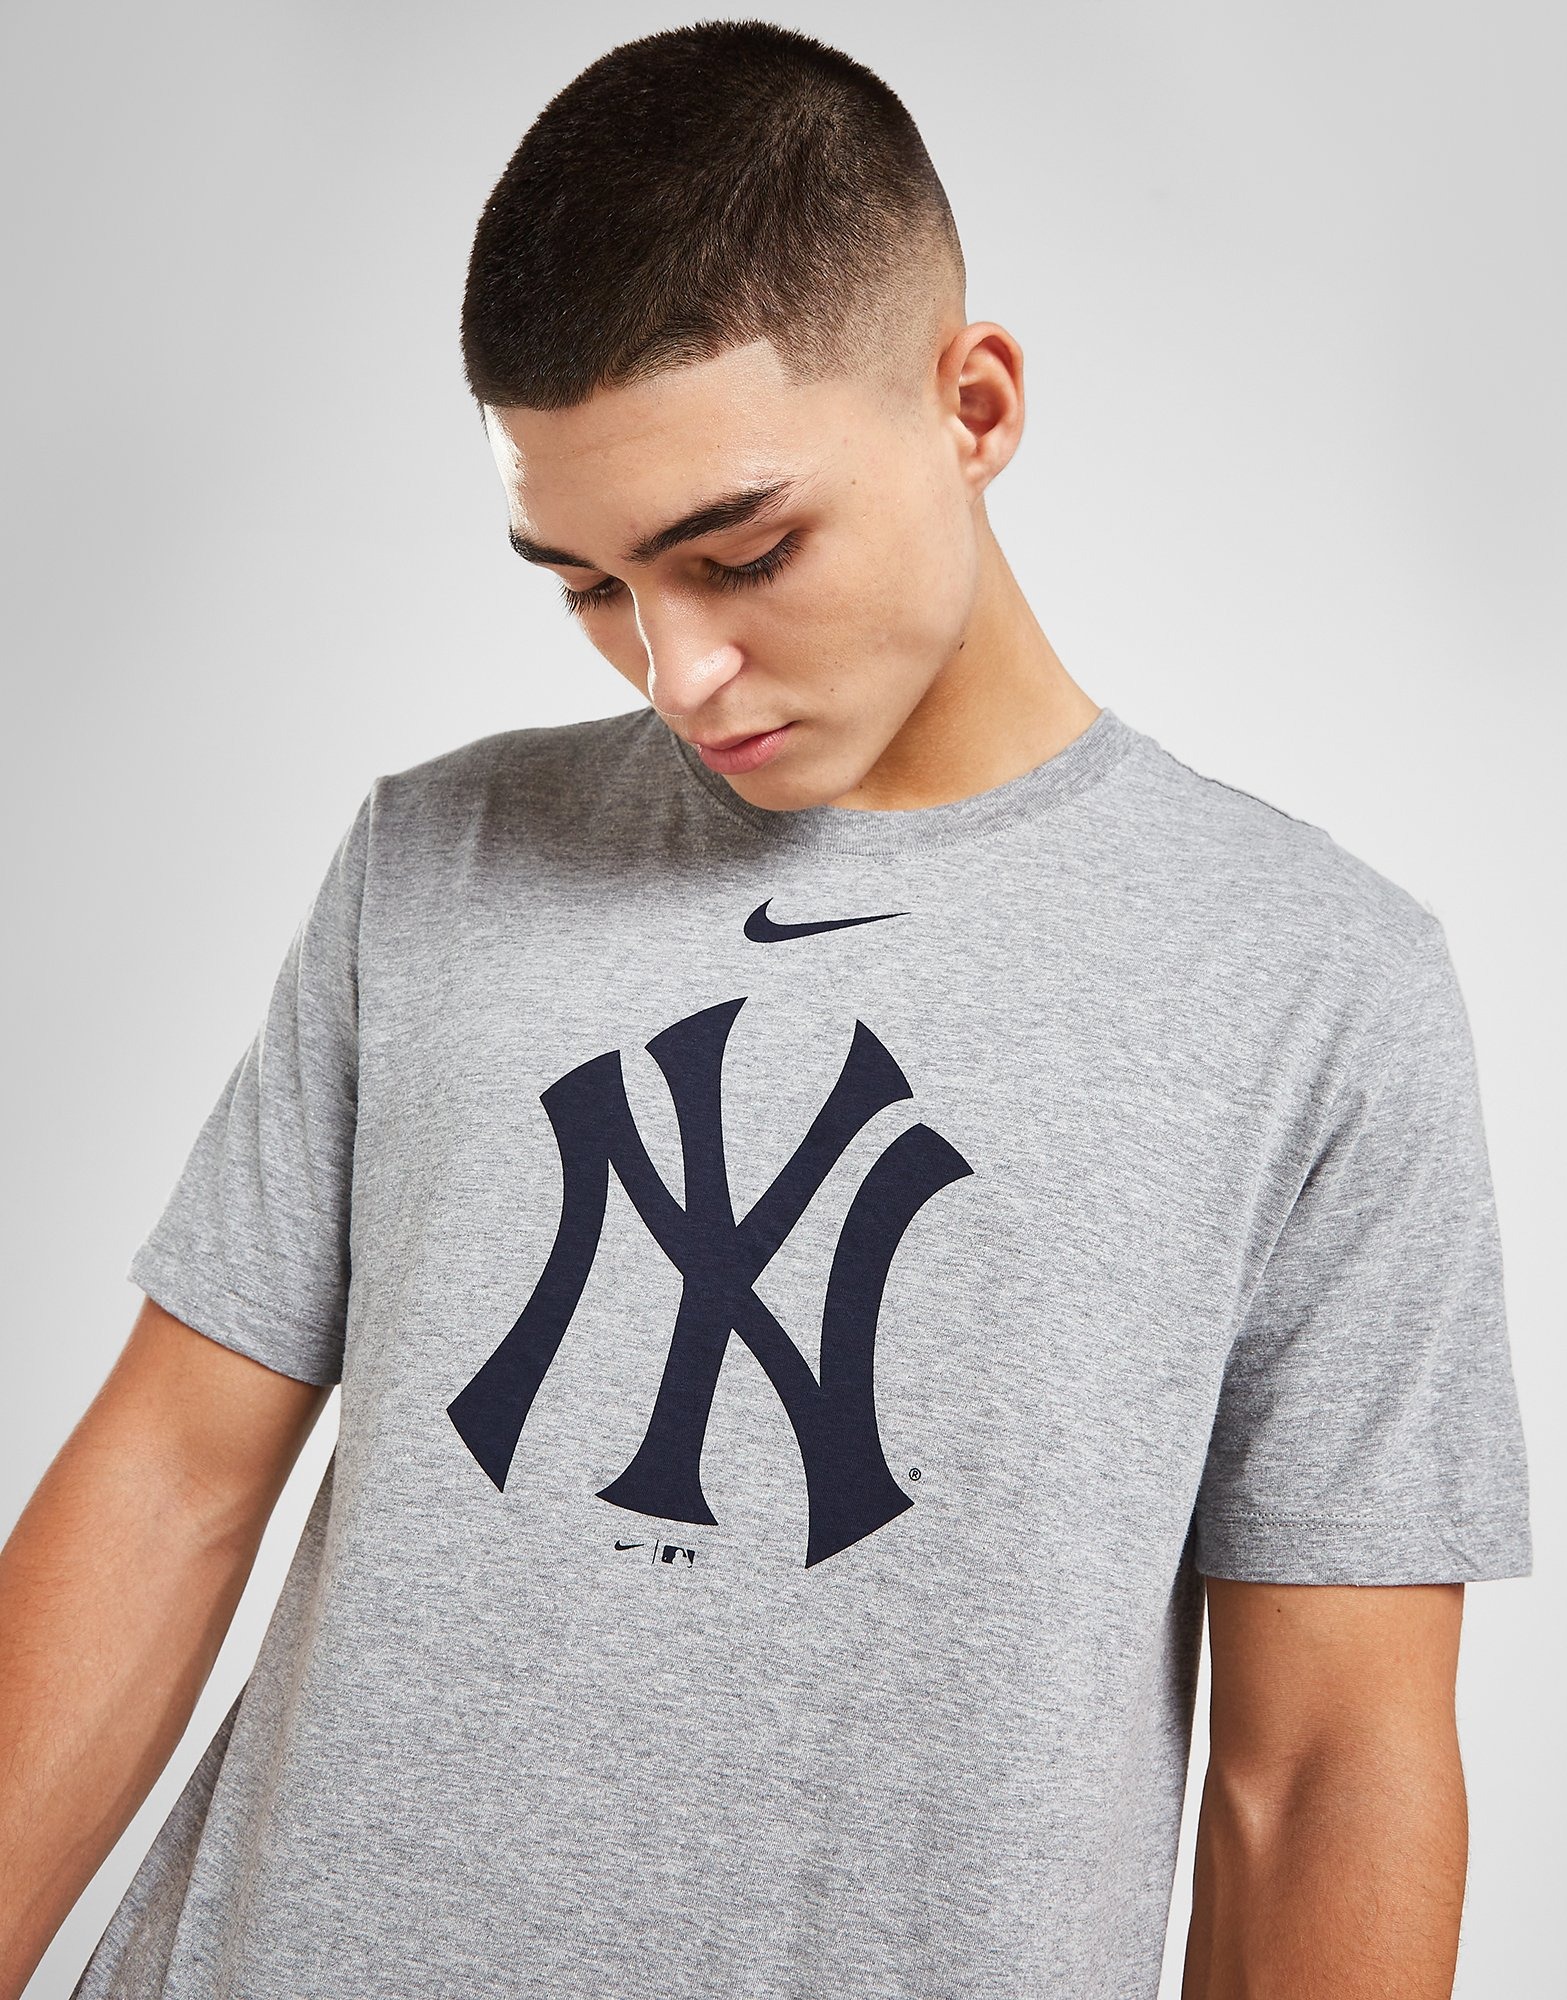 Nike, Shirts & Tops, Gray Yankees Tshirt